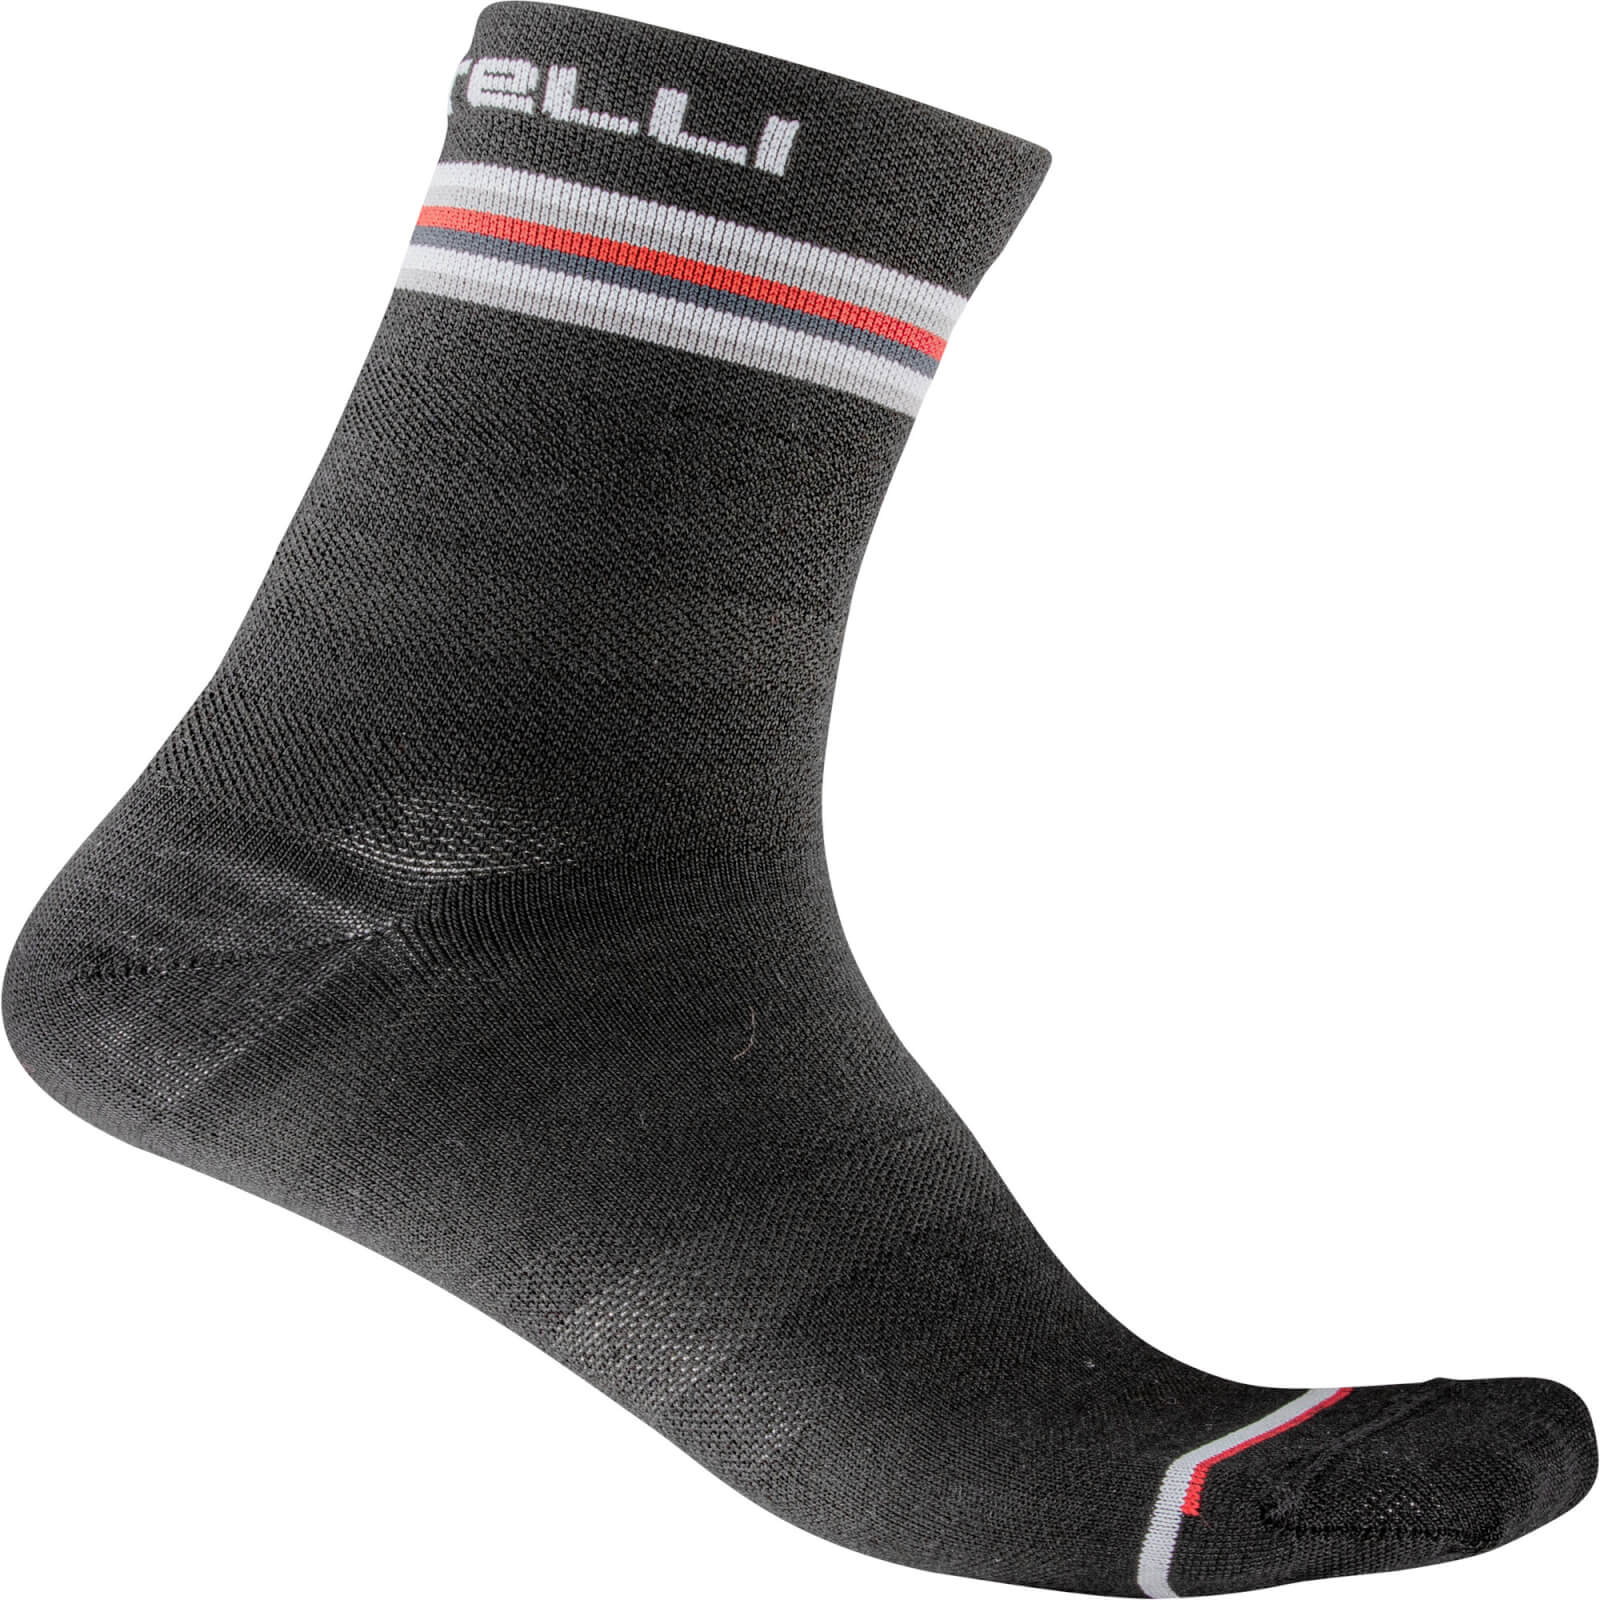 Castelli Women's Go 15 Socks - S/M - Dark Grey/White/Red